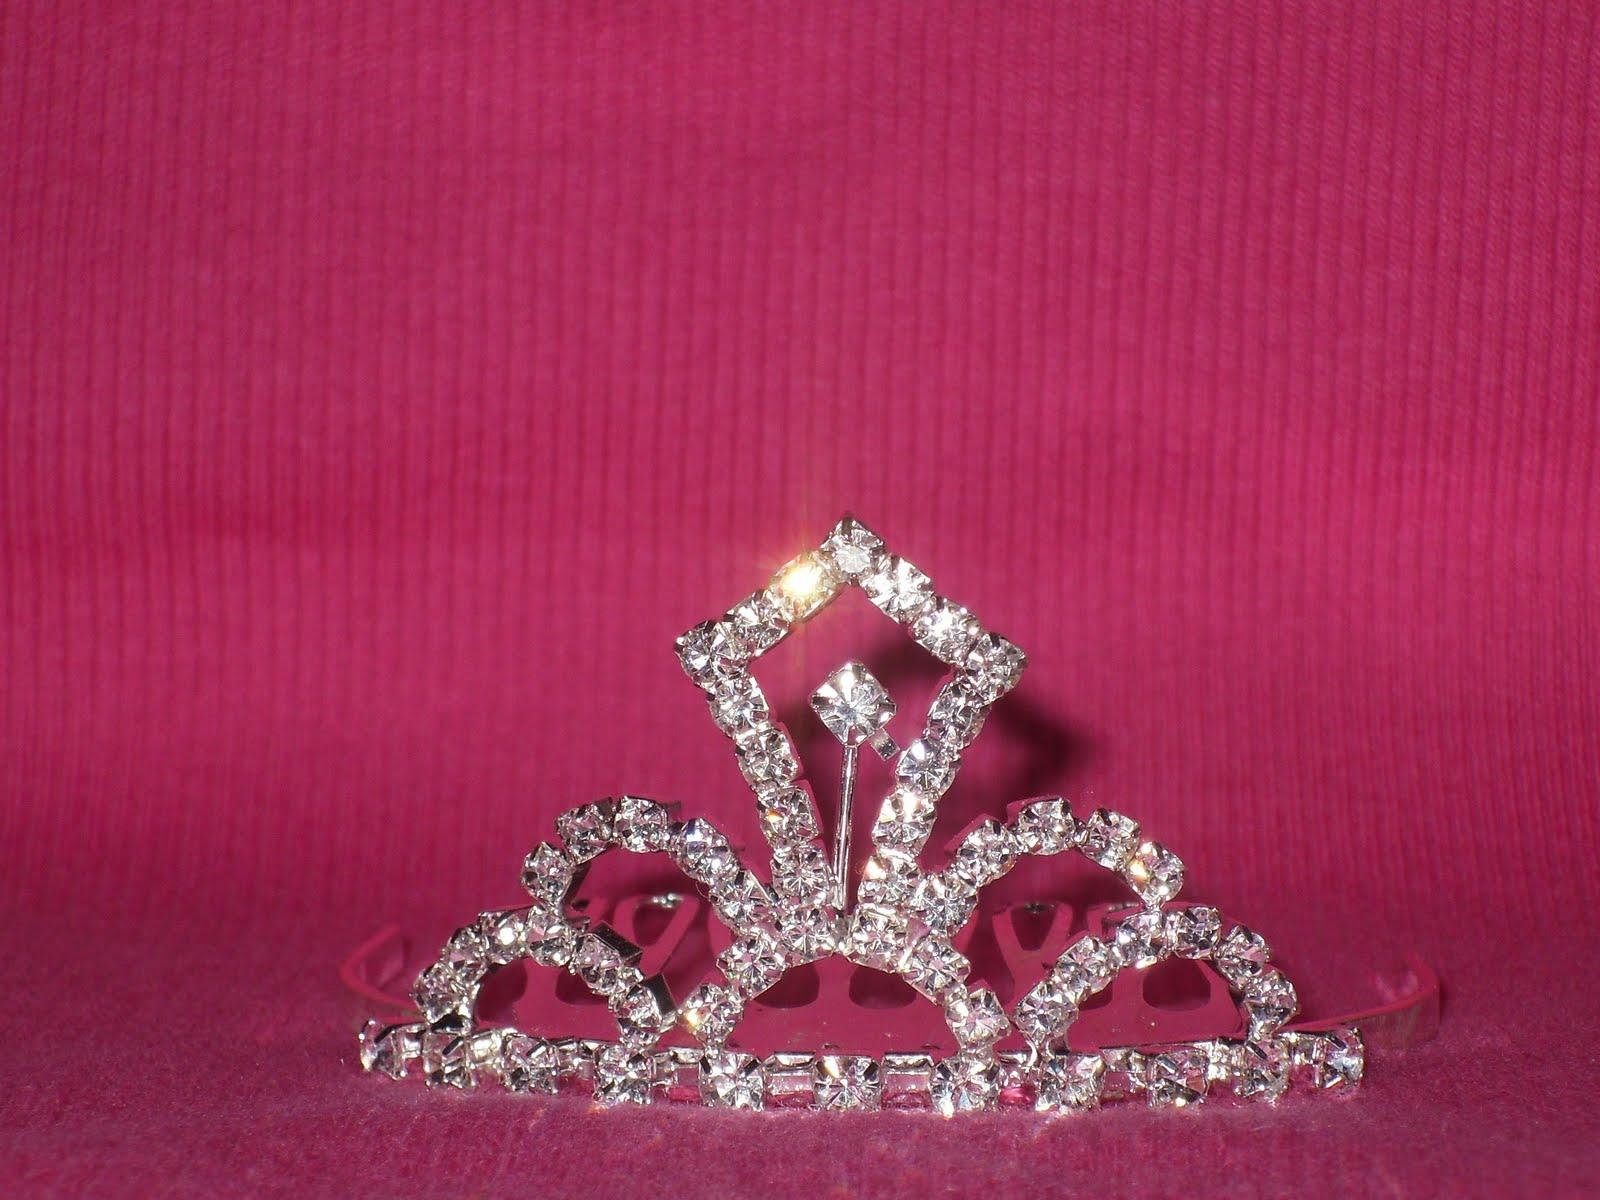 New Princess Bling Crowns Princess Crown, HD Wallpaper